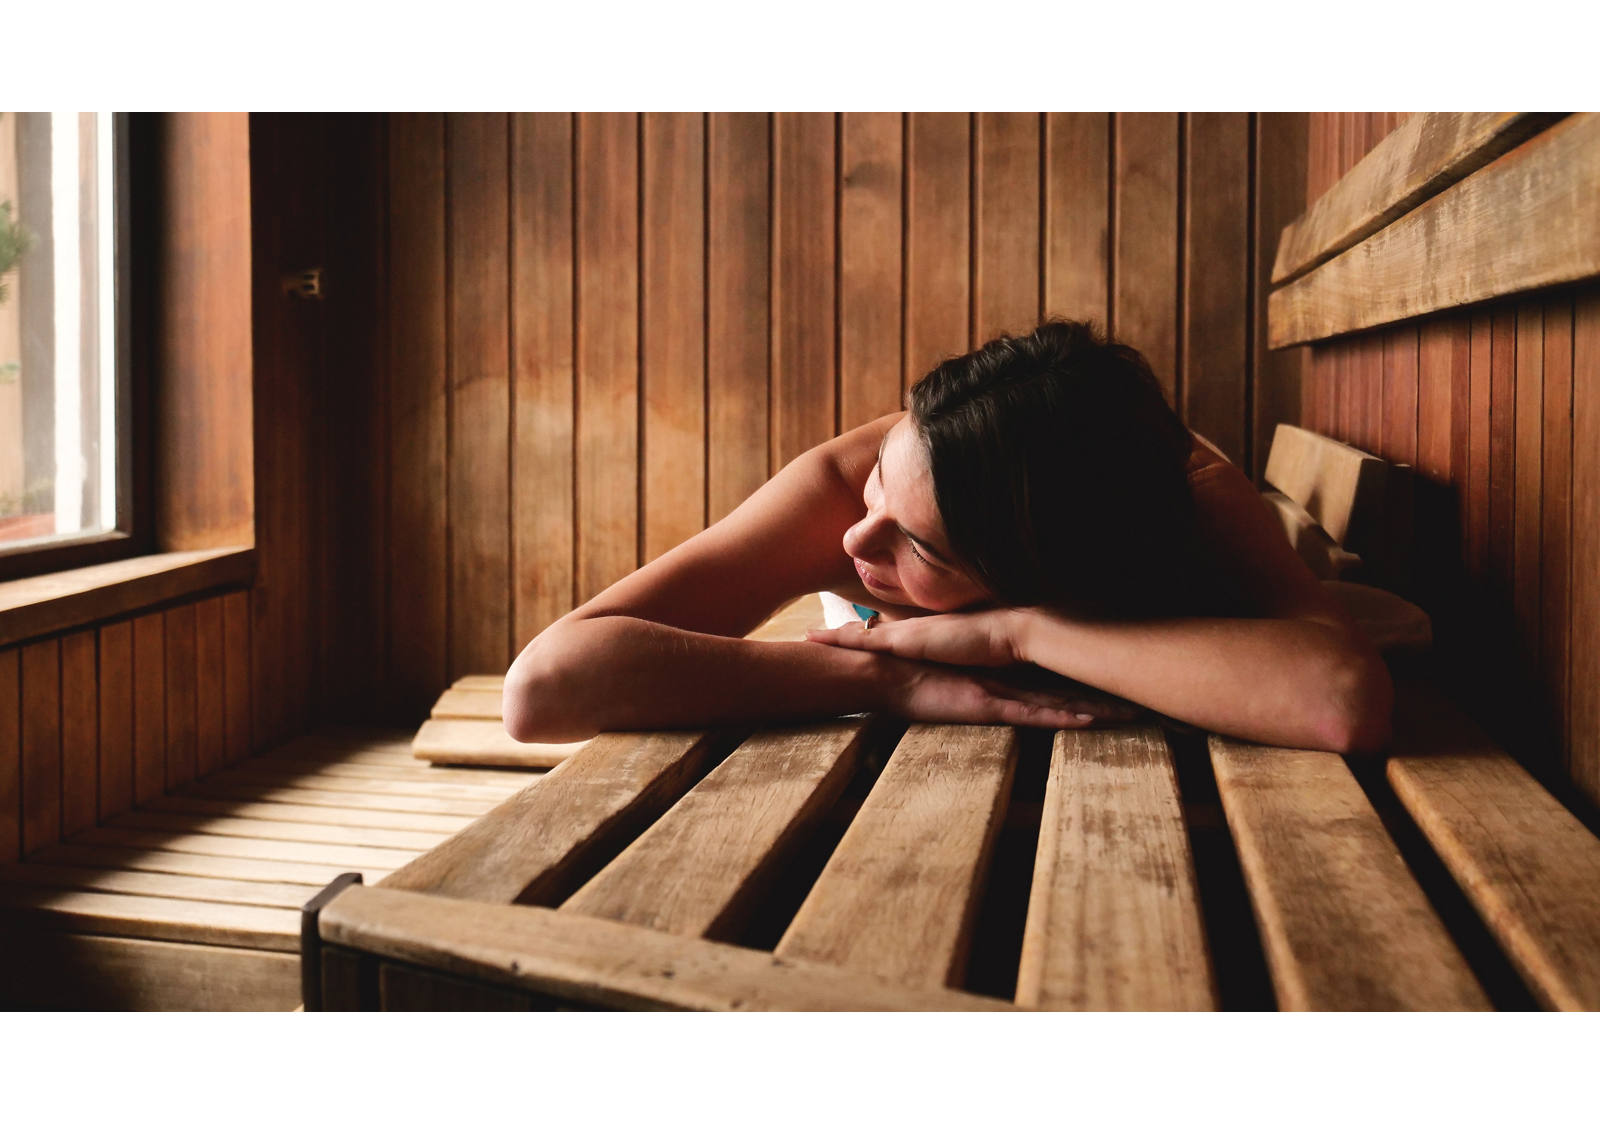 La sauna è salutare?